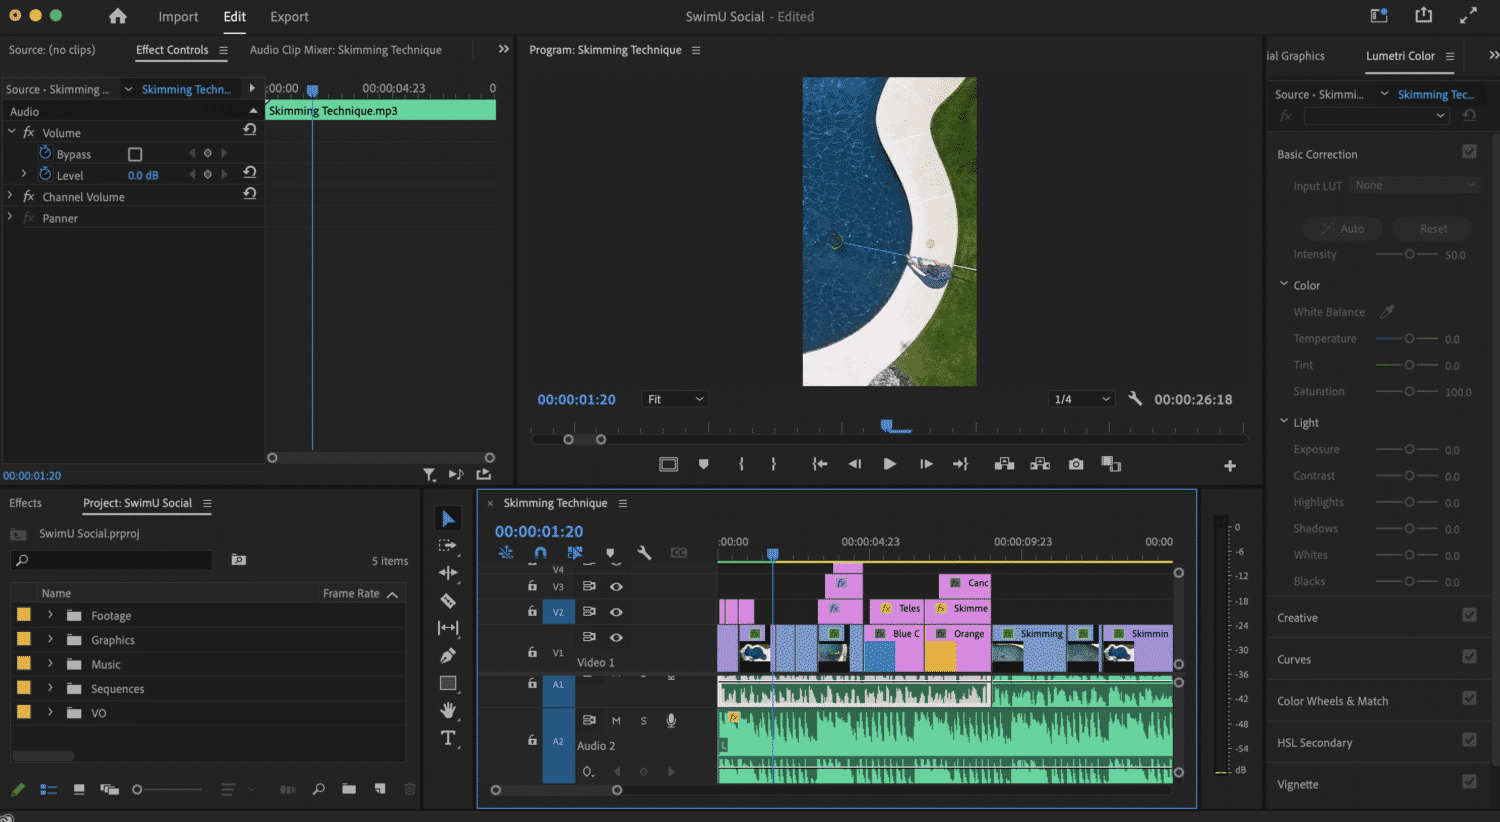 Editing Short Videos in Adobe Premiere